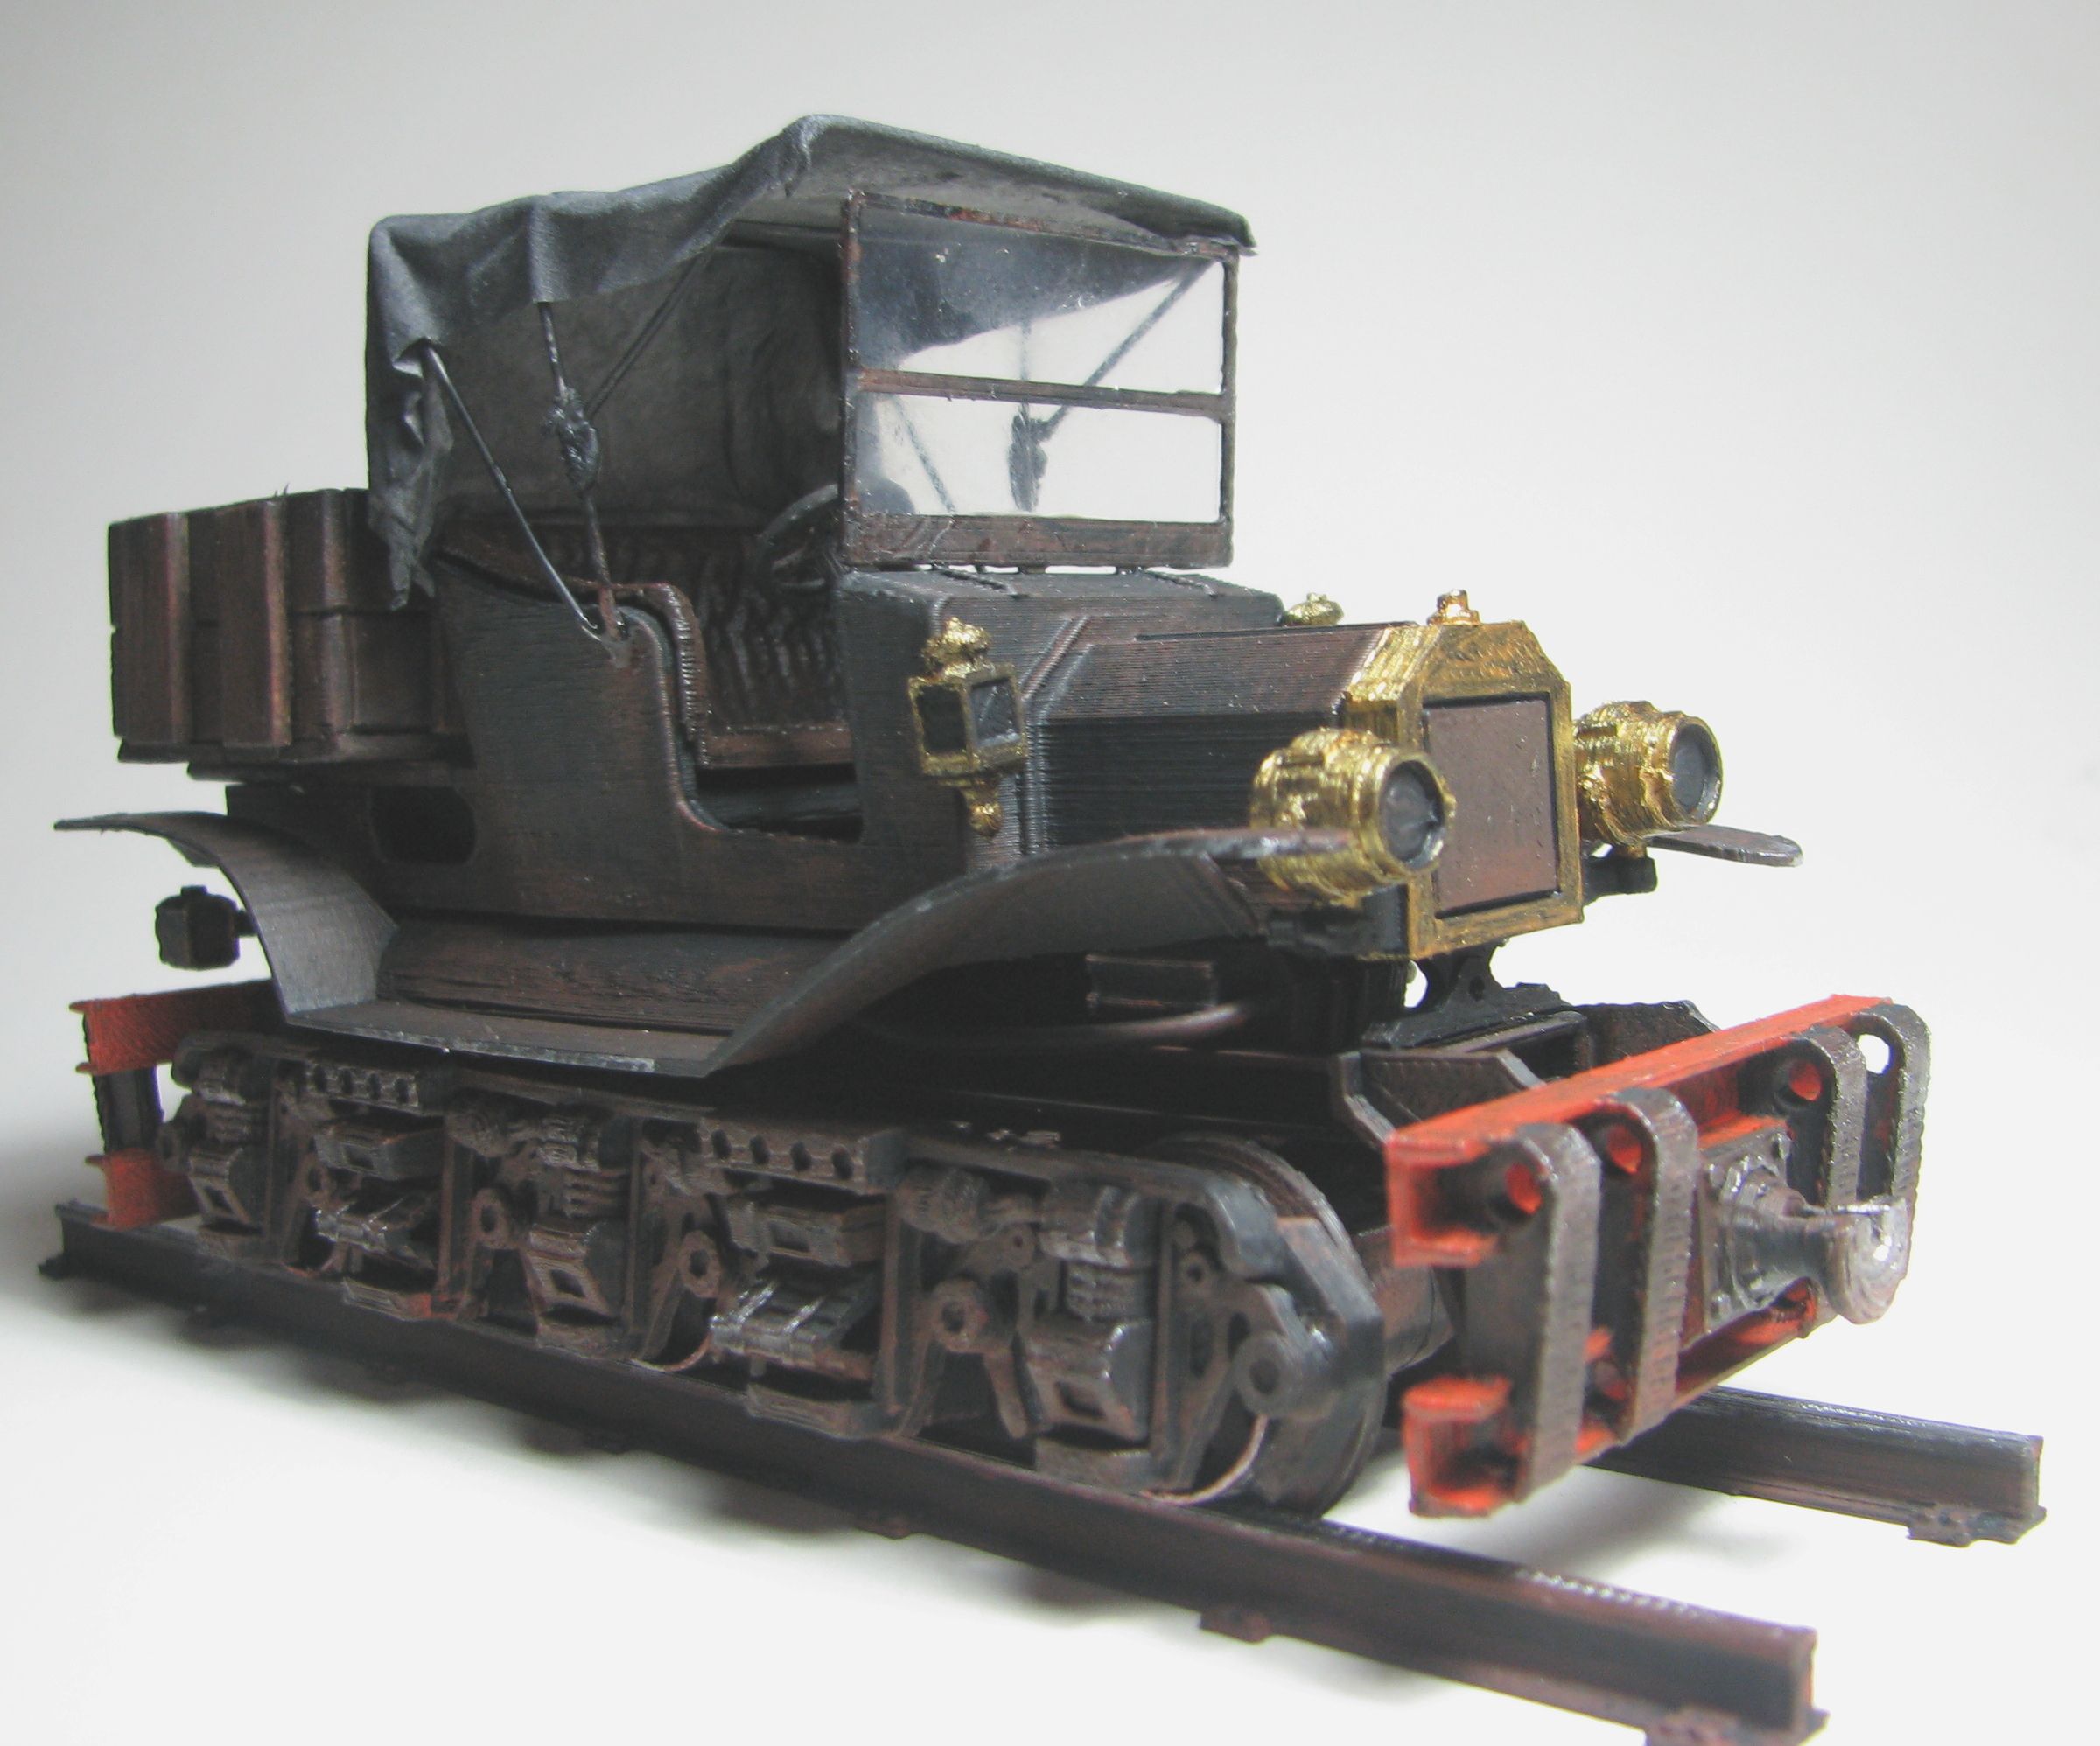 VintageRailcar_WithCanopy04.jpg Download free STL file Vintage Railcar - 36mm gauge • 3D printer design, BouncyMonkey